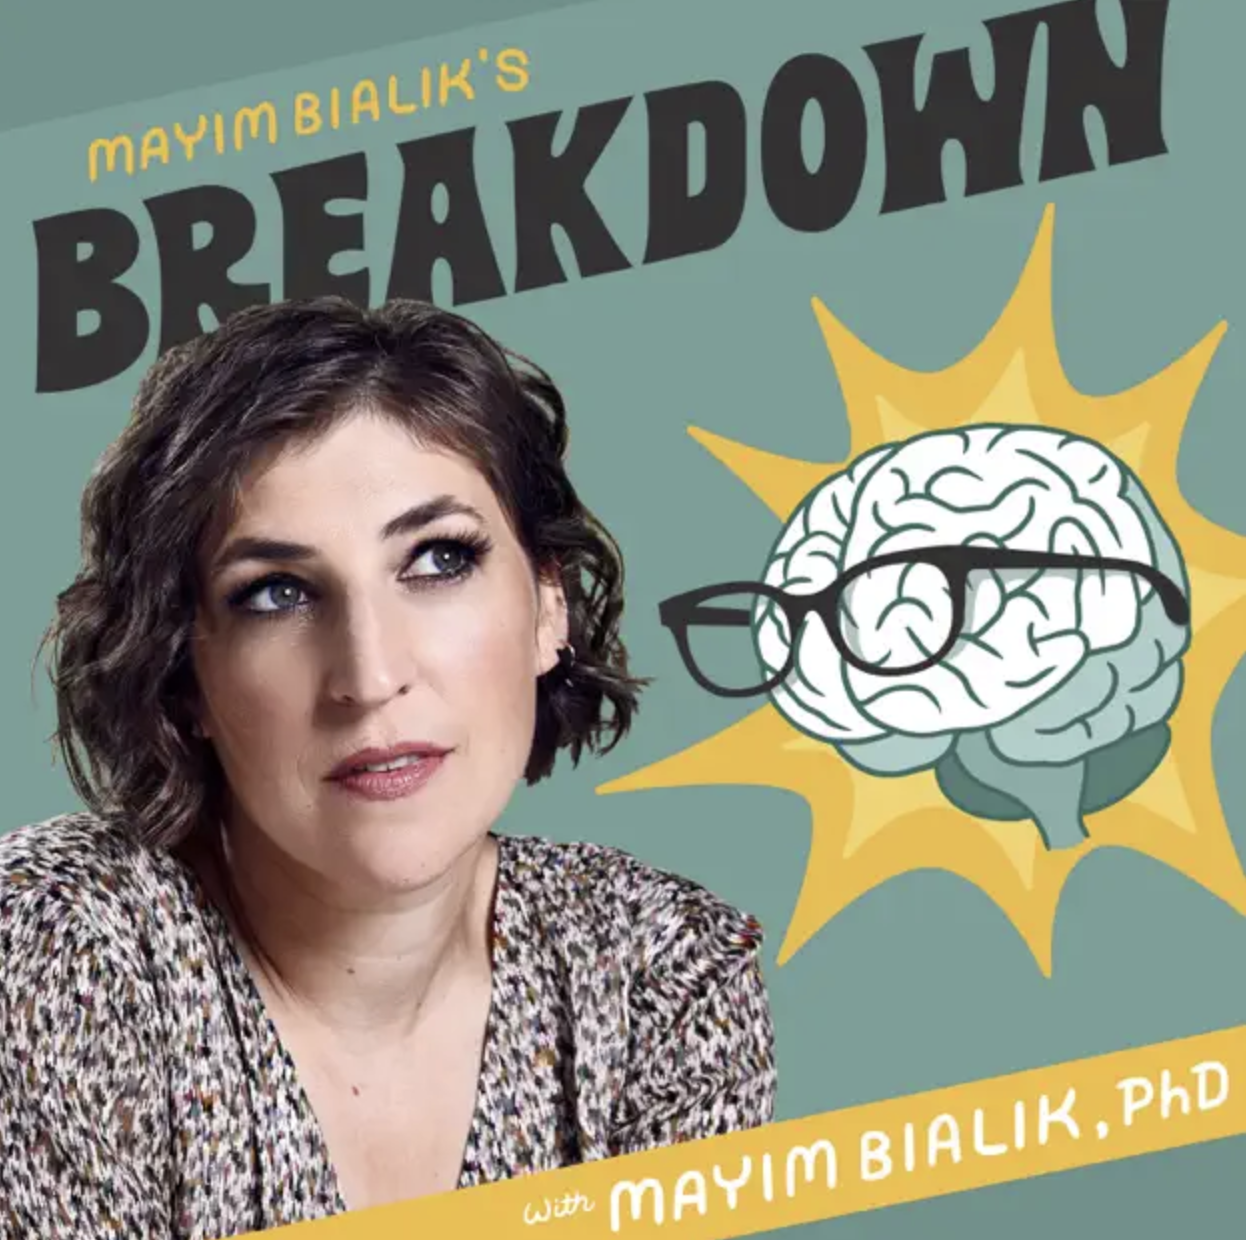 'Mayim Bialik's Breakdown'